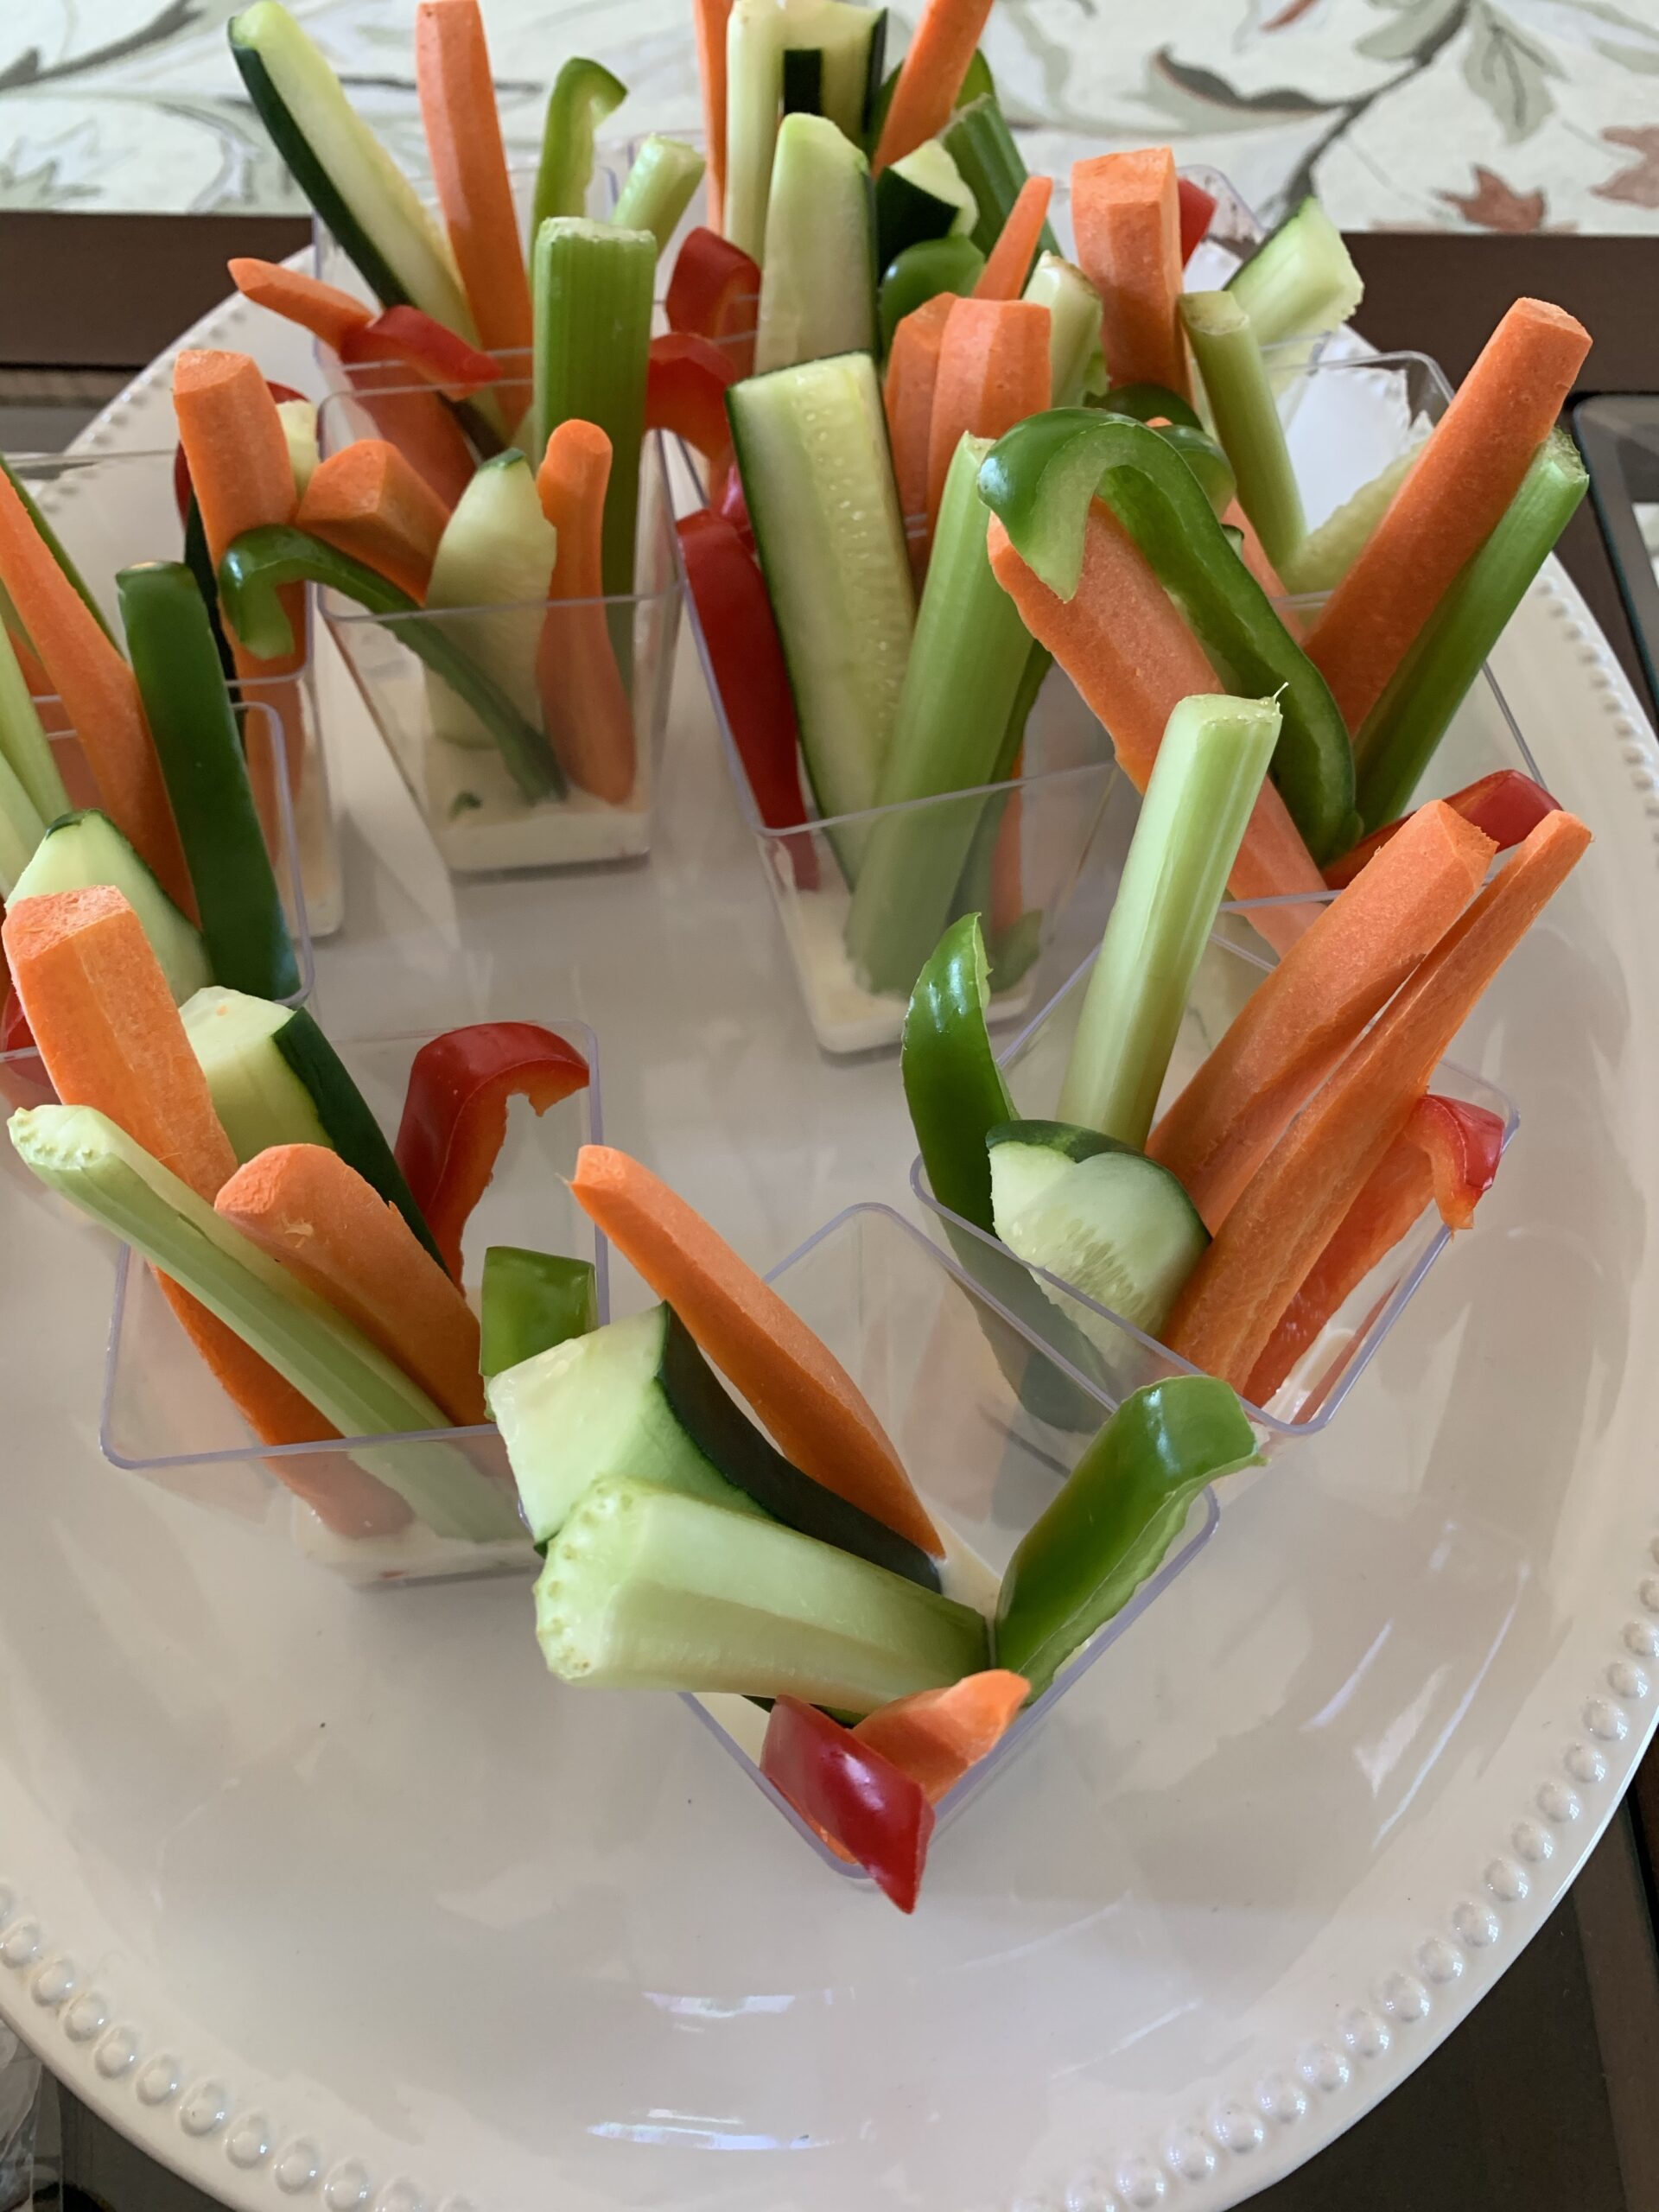 individual servings of vegetables and dip